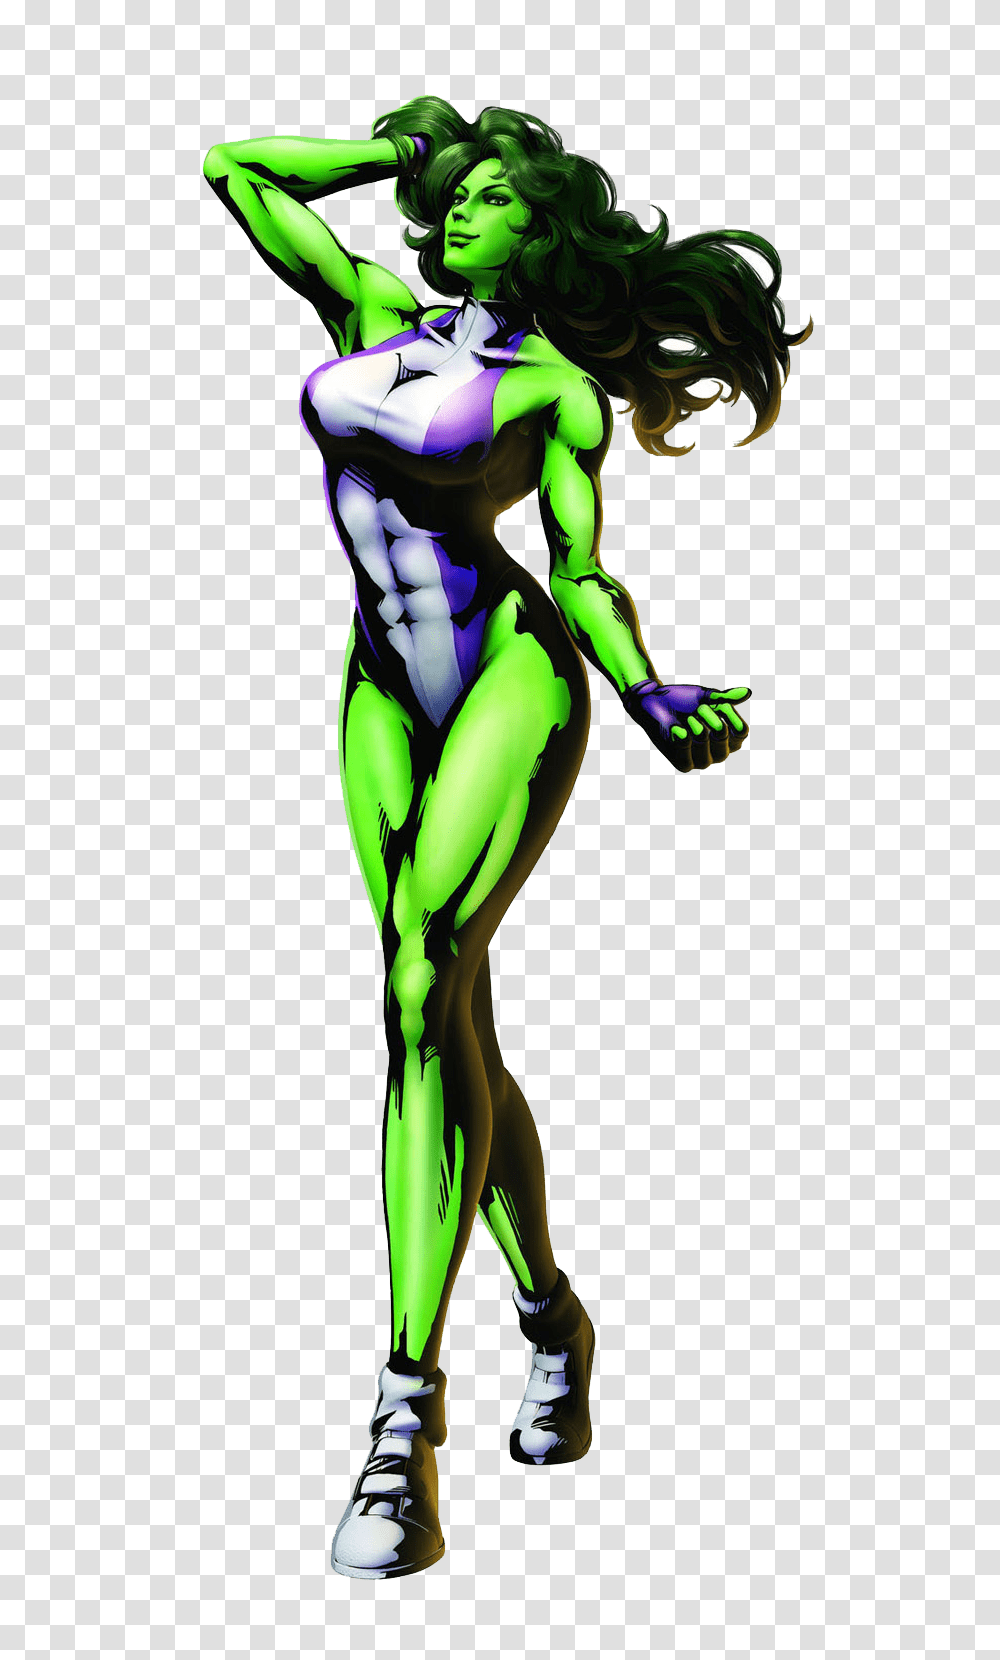 She Hulk Images Free Download, Costume, Spandex Transparent Png